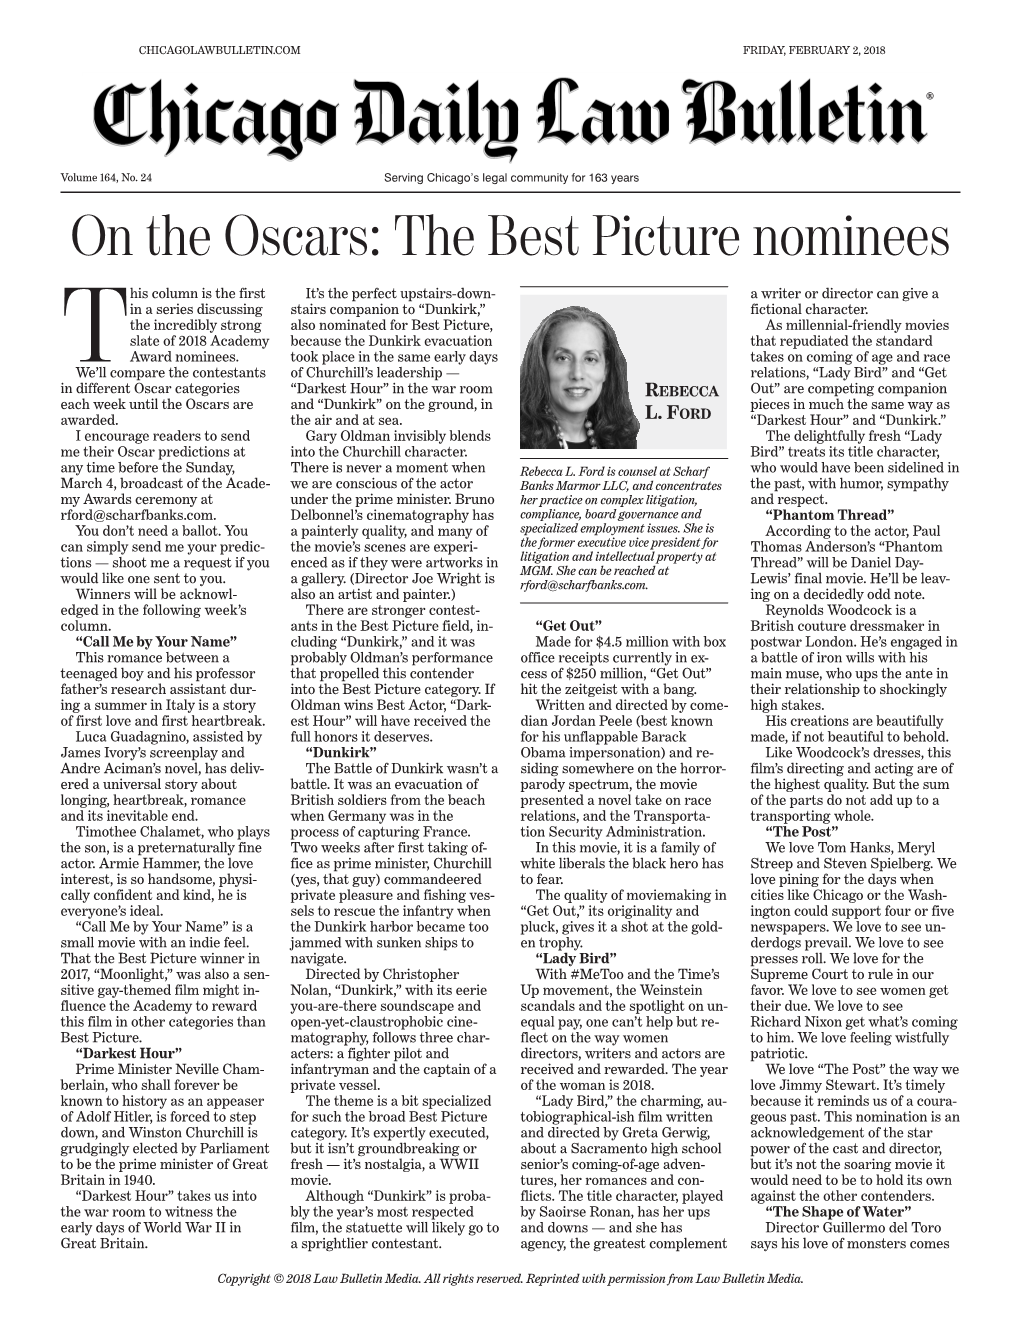 Oscars Article